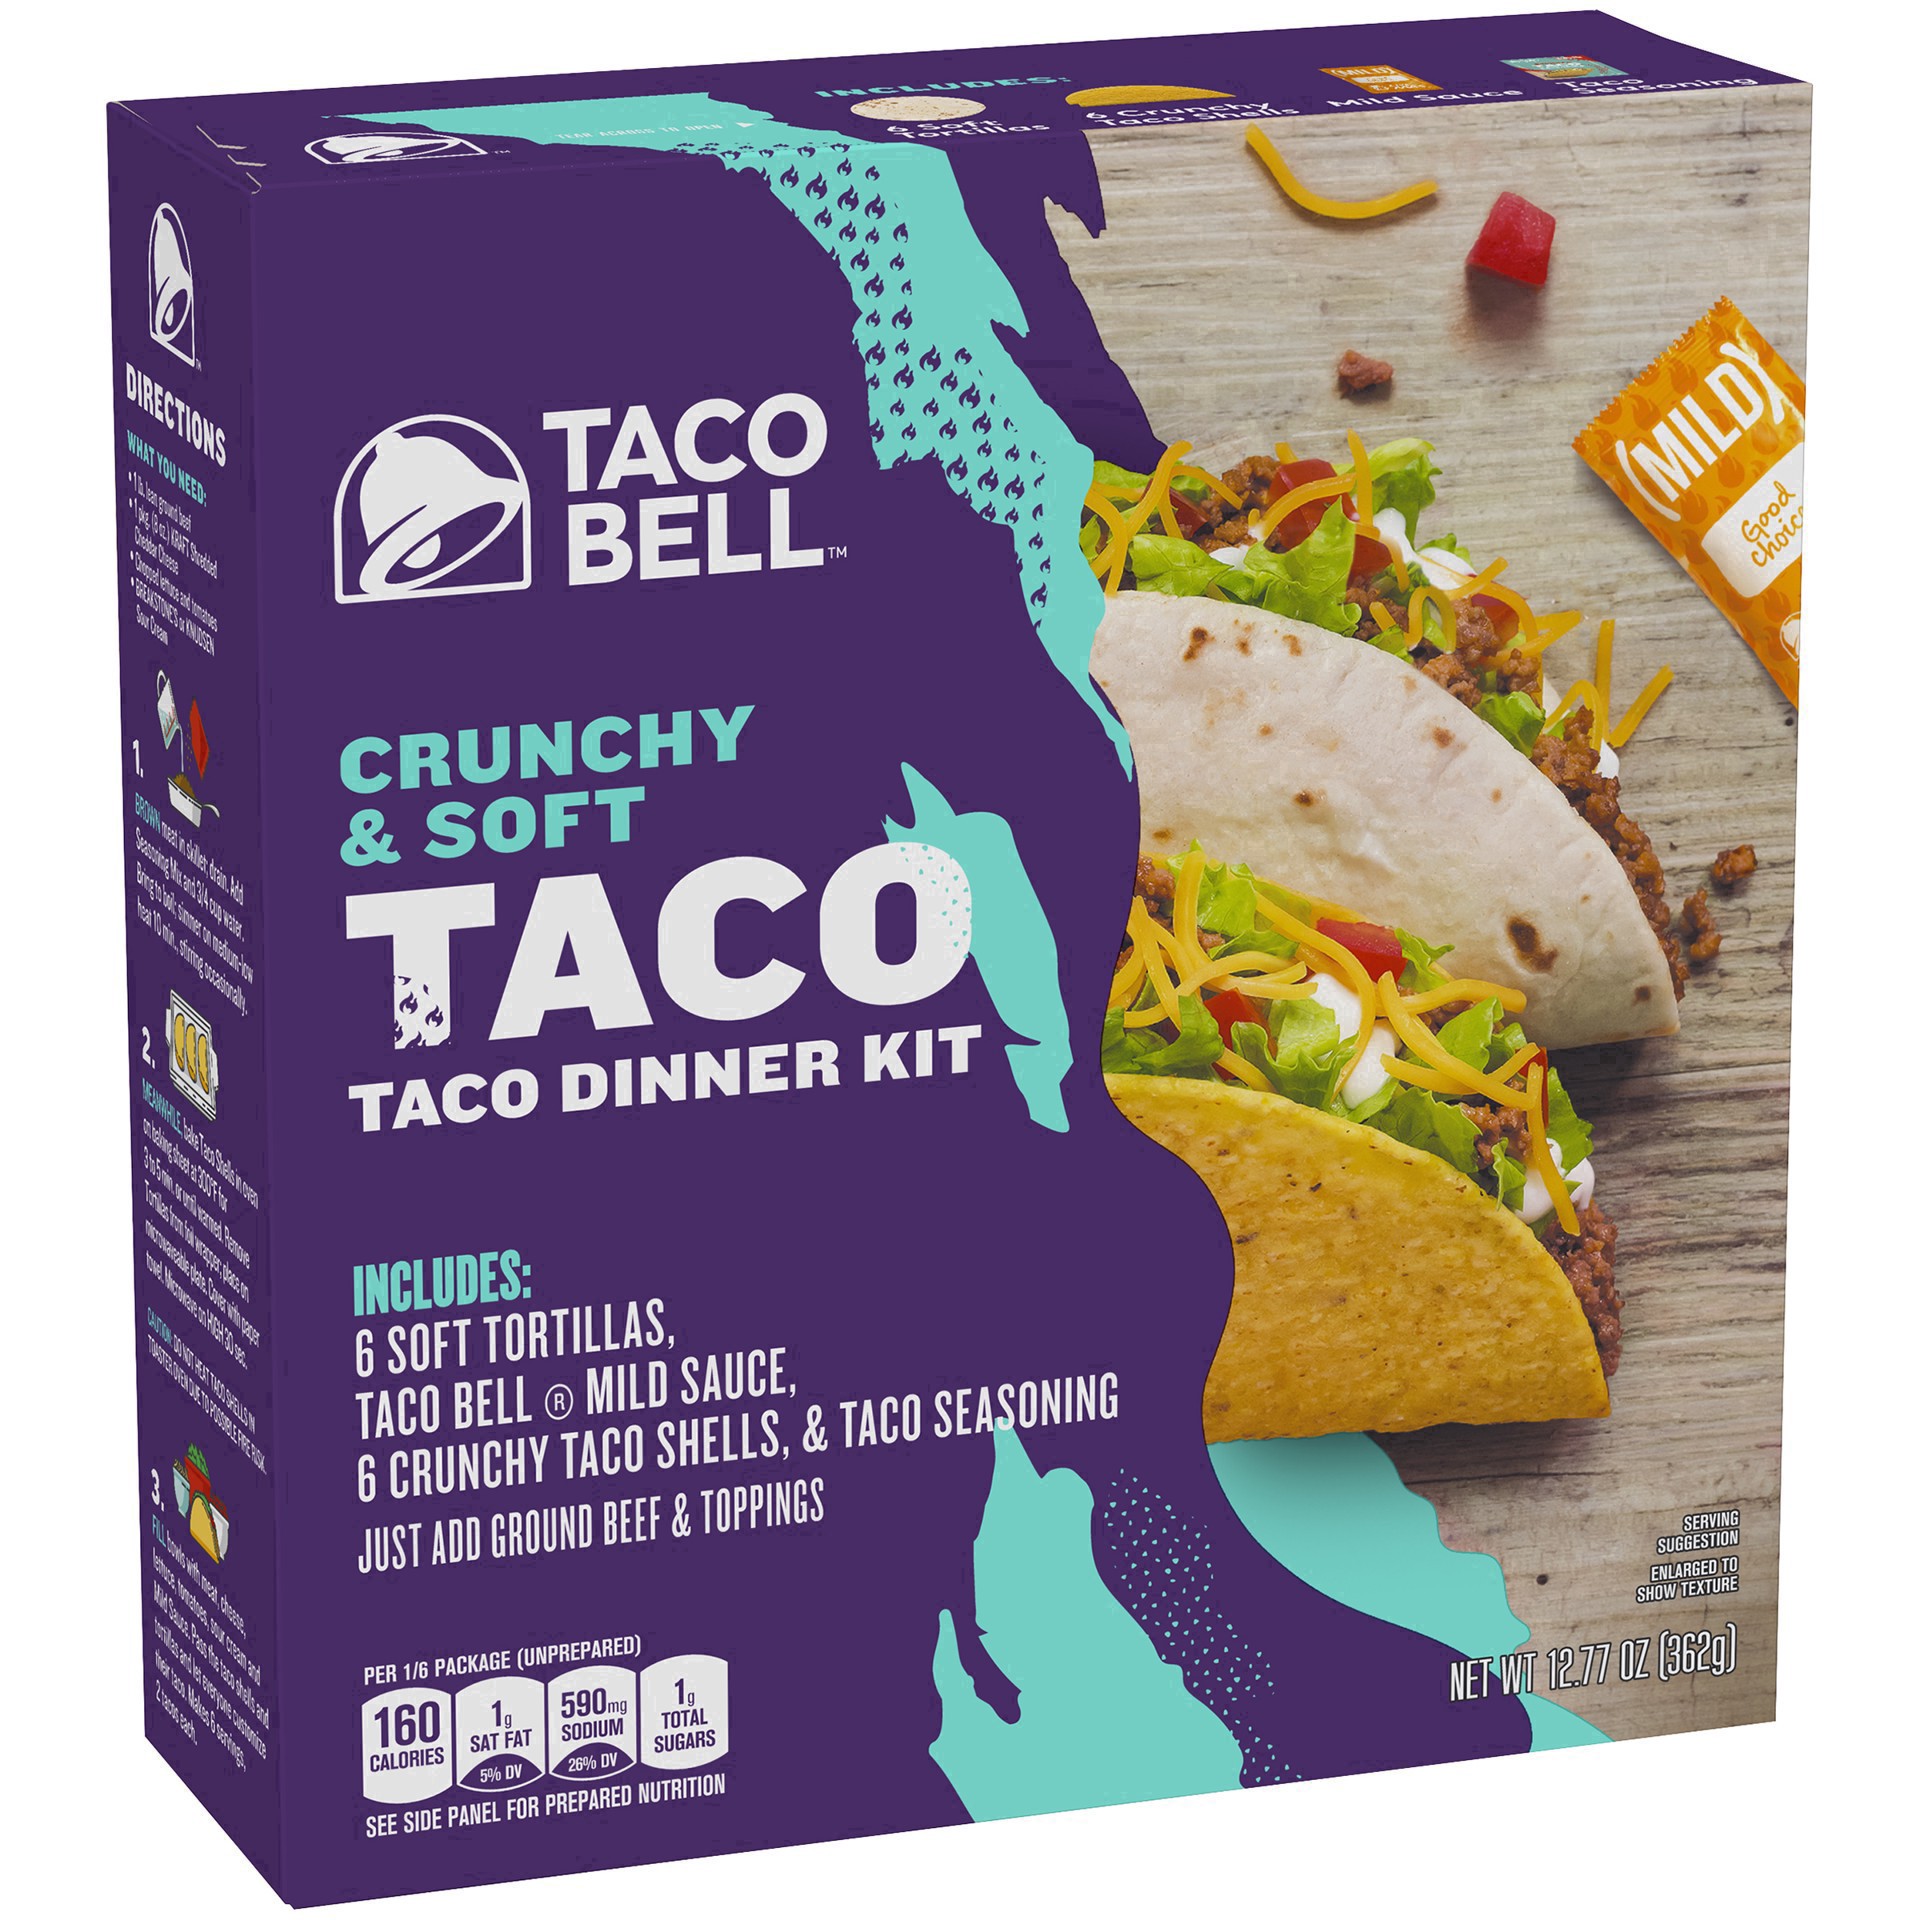 slide 77 of 101, Taco Bell Crunchy & Soft Taco Cravings Kit with 6 Soft Tortillas, 6 Crunchy Taco Shells, Taco Bell Mild Sauce & Seasoning, 12.77 oz Box, 1 ct